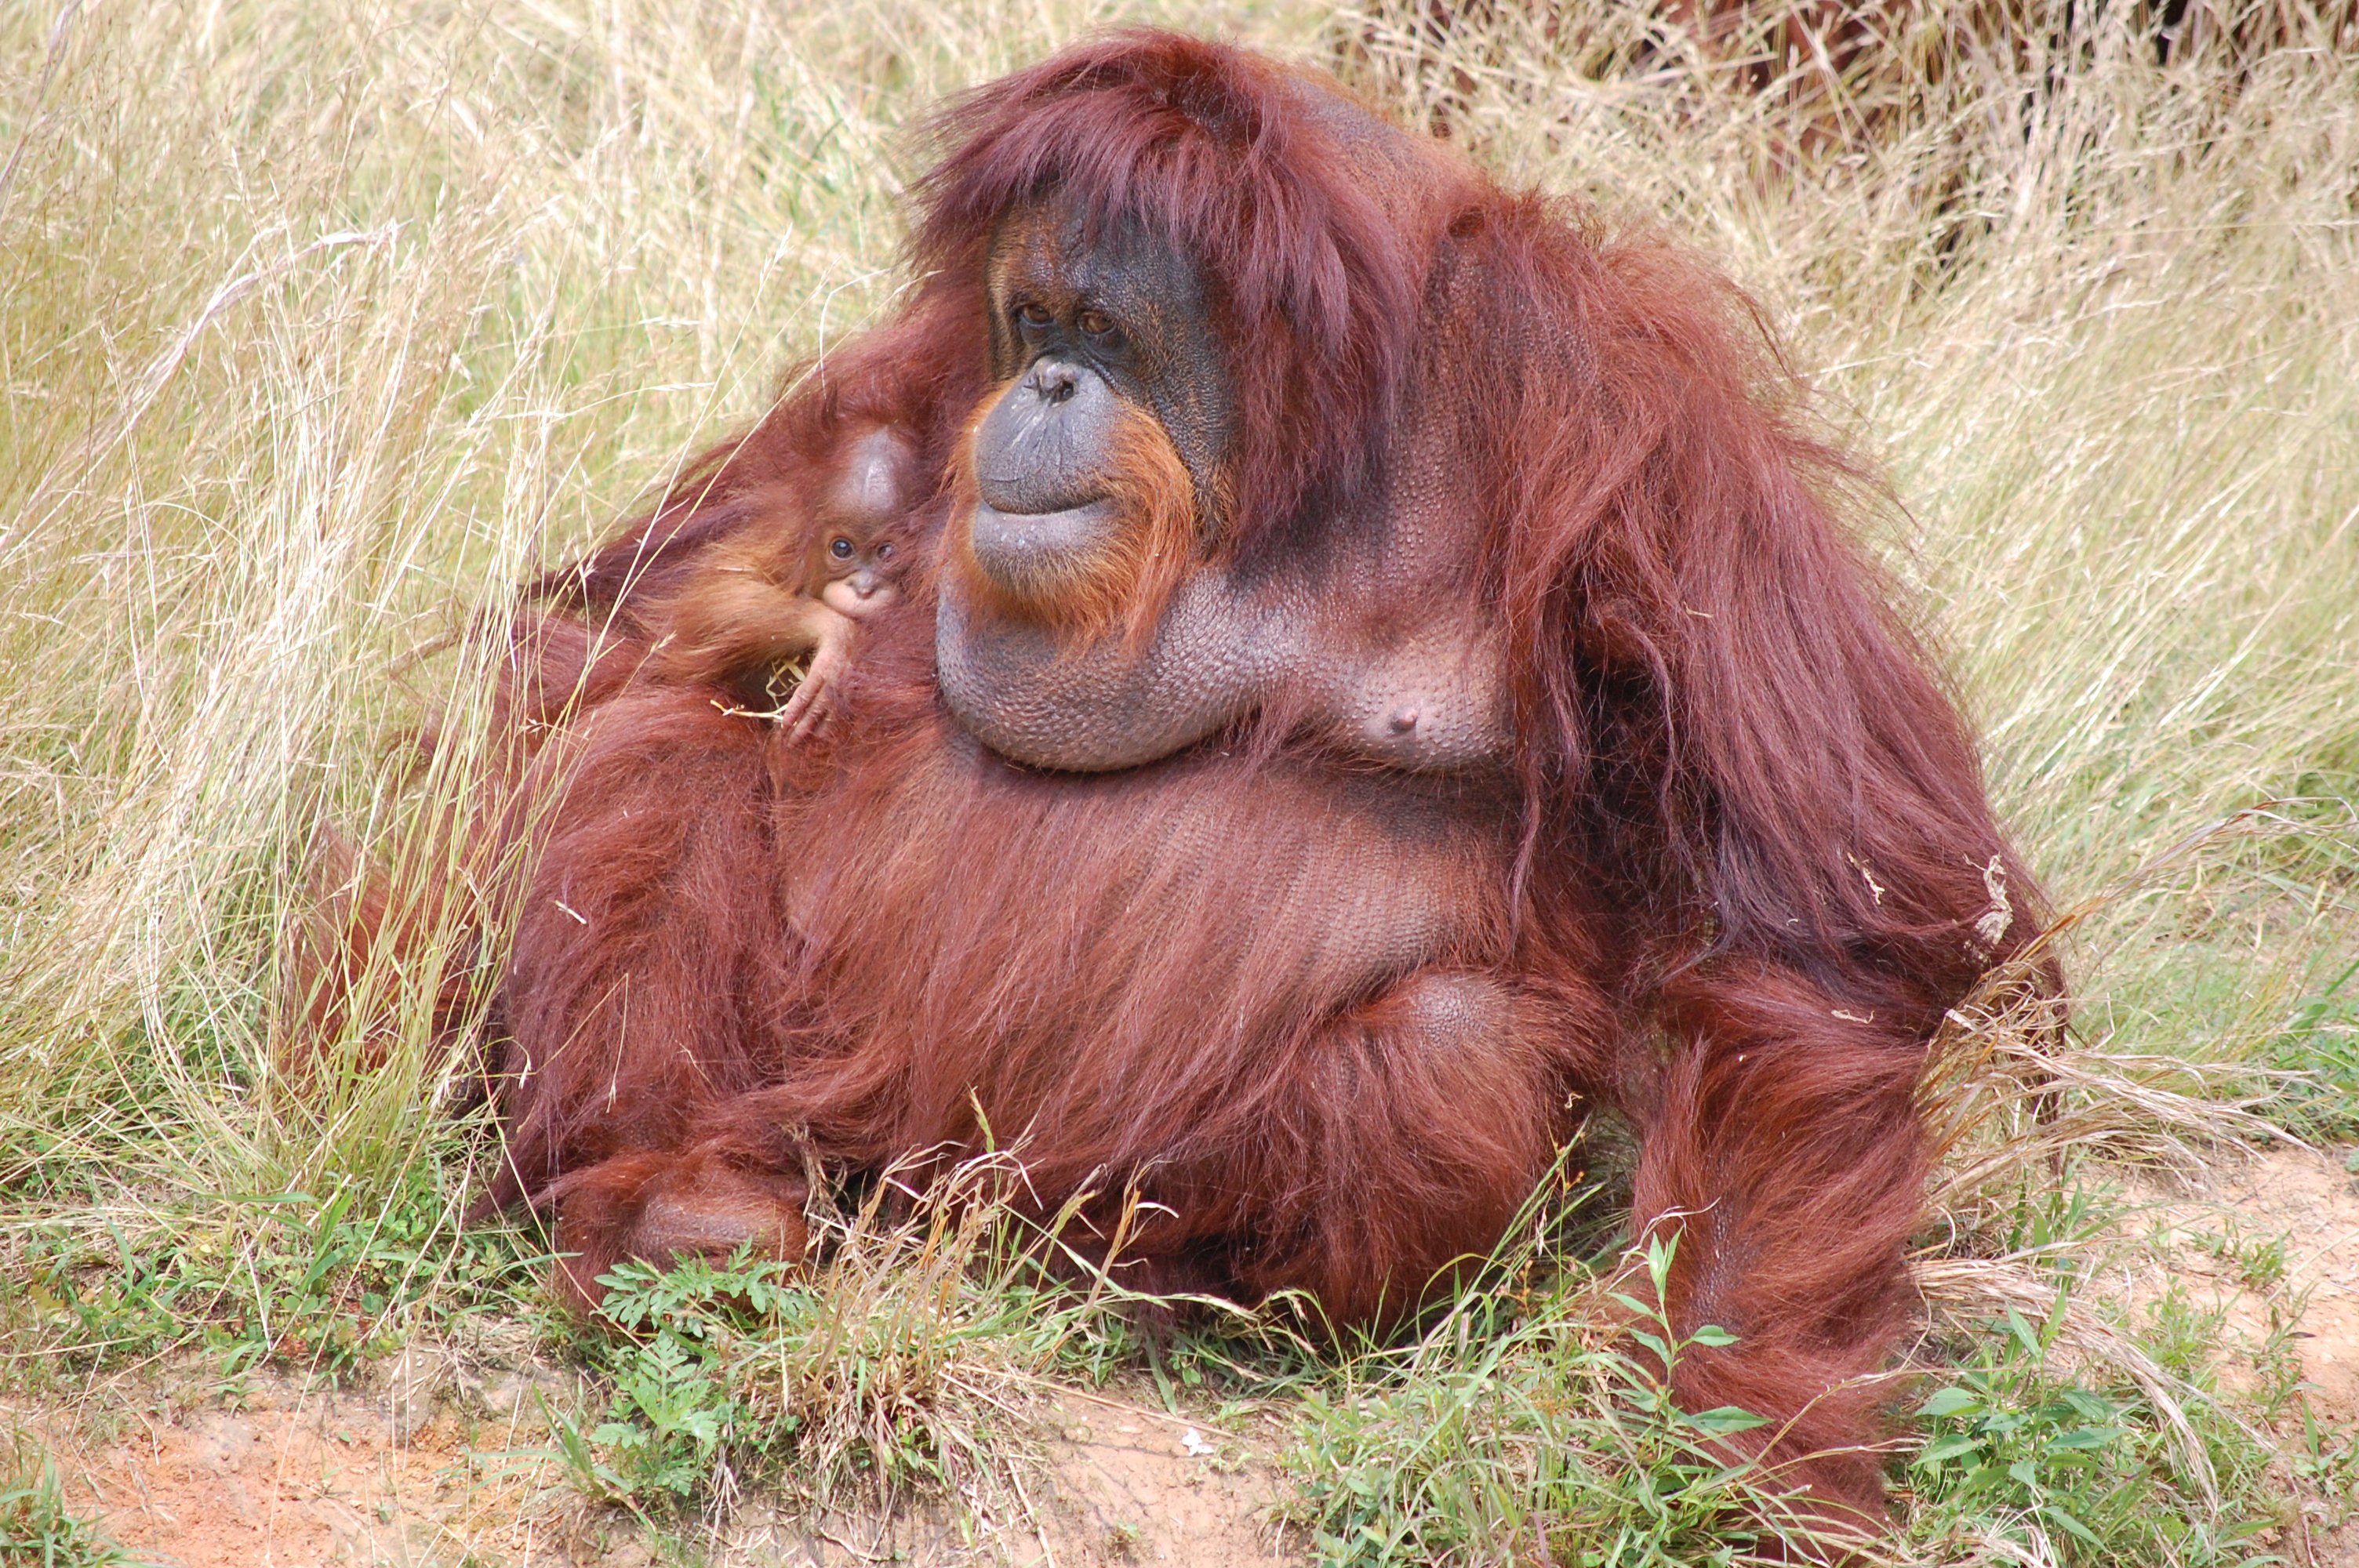 Warmer weather brings out baby orangutan 'RJ' at Richmond Zoo | WTVR.com